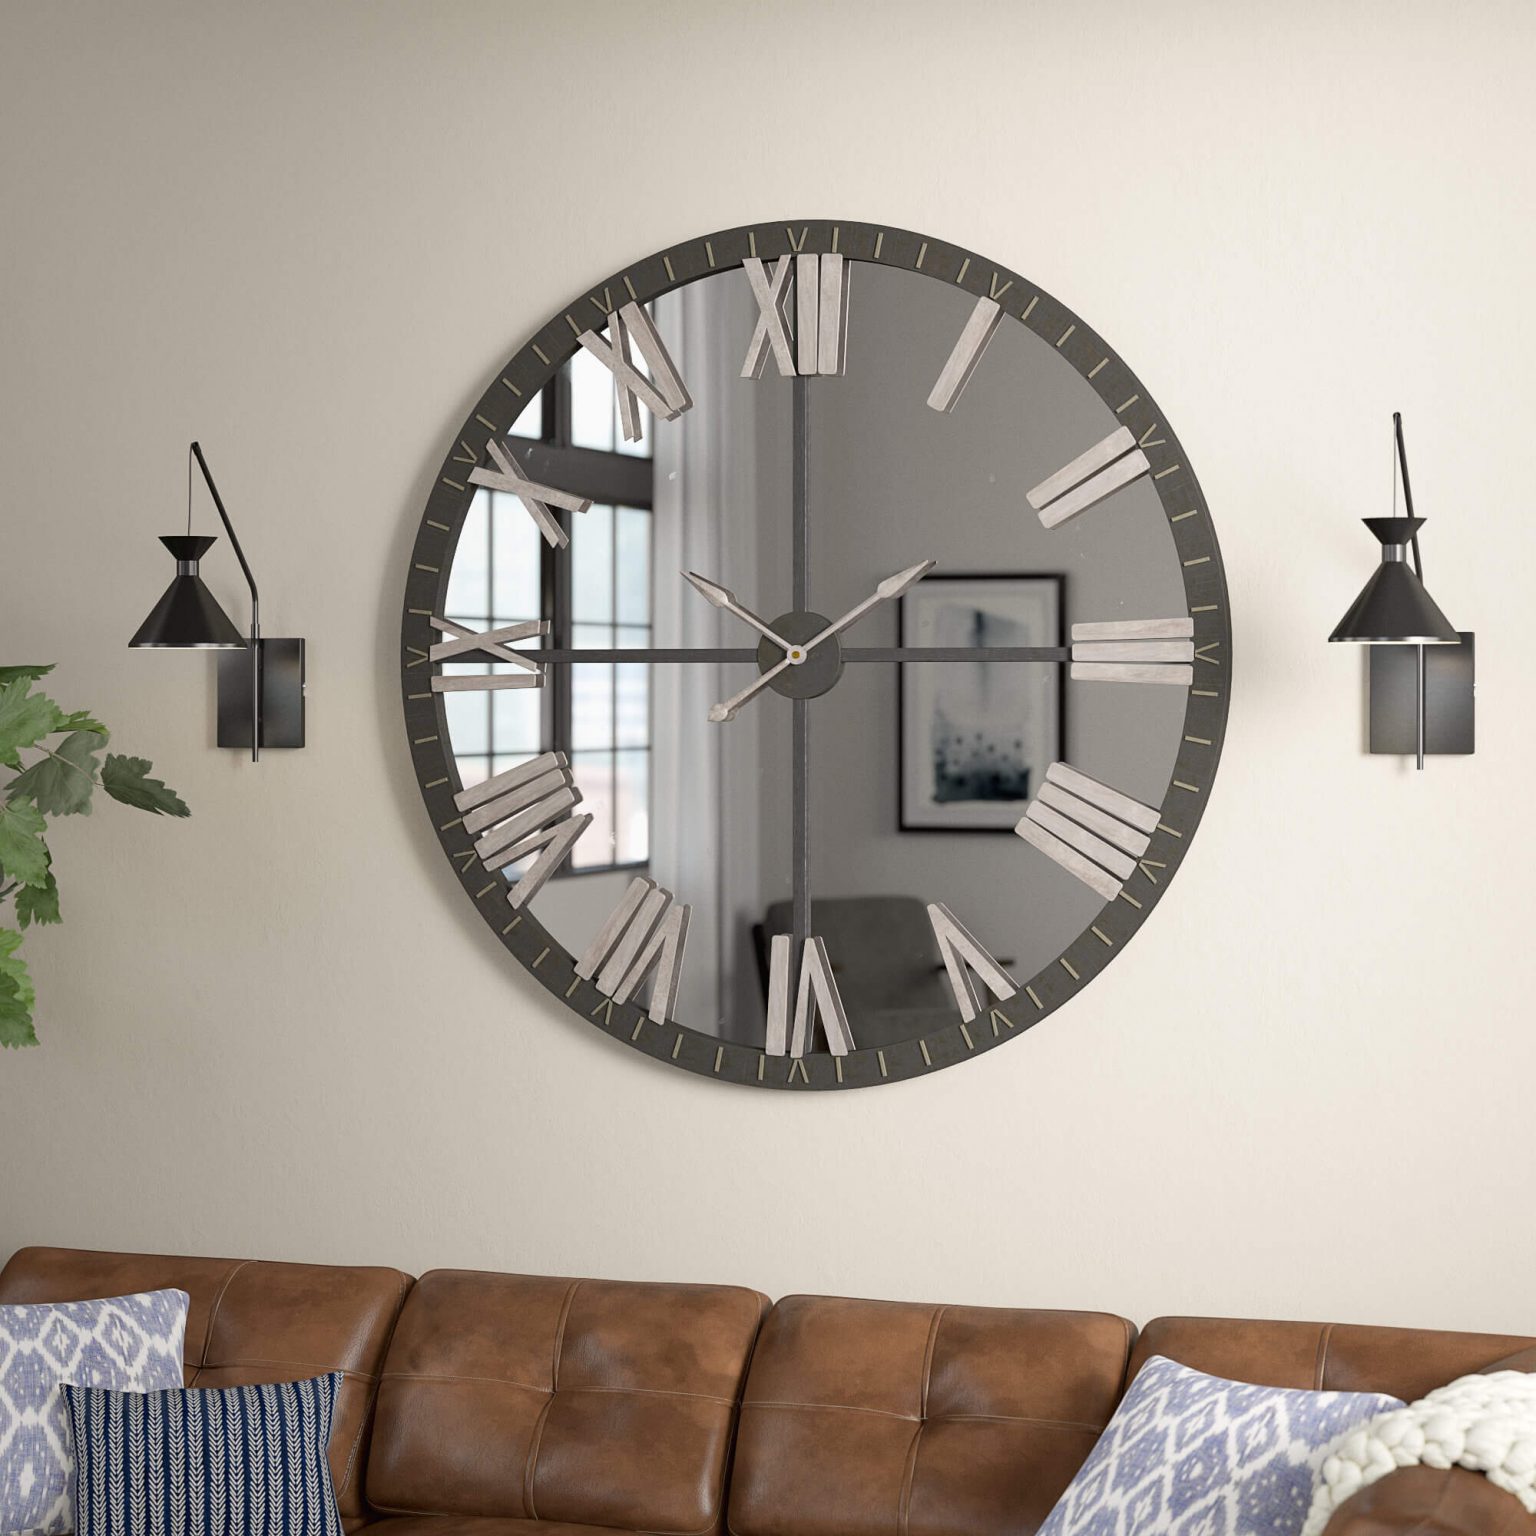 20 Best Decorative Wall Clocks for Living Room UK